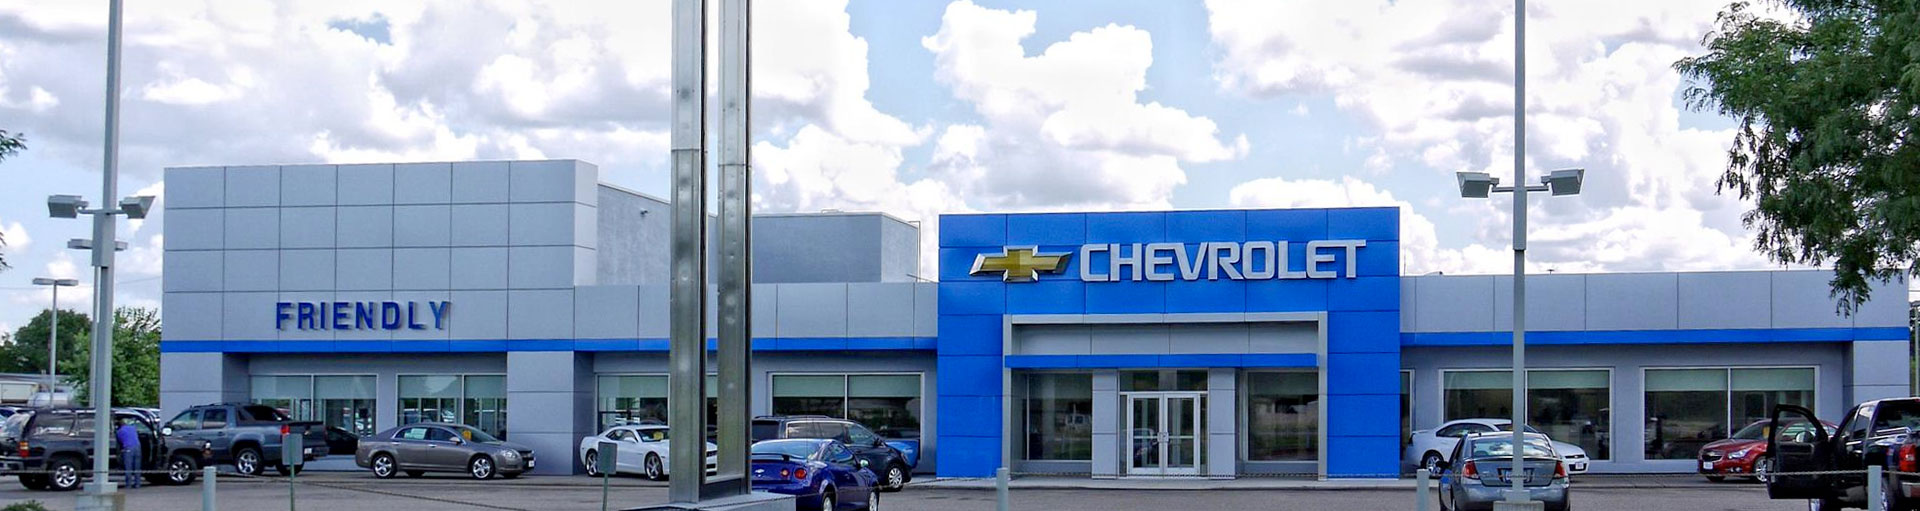 Friendly Chevrolet Certified Technicians